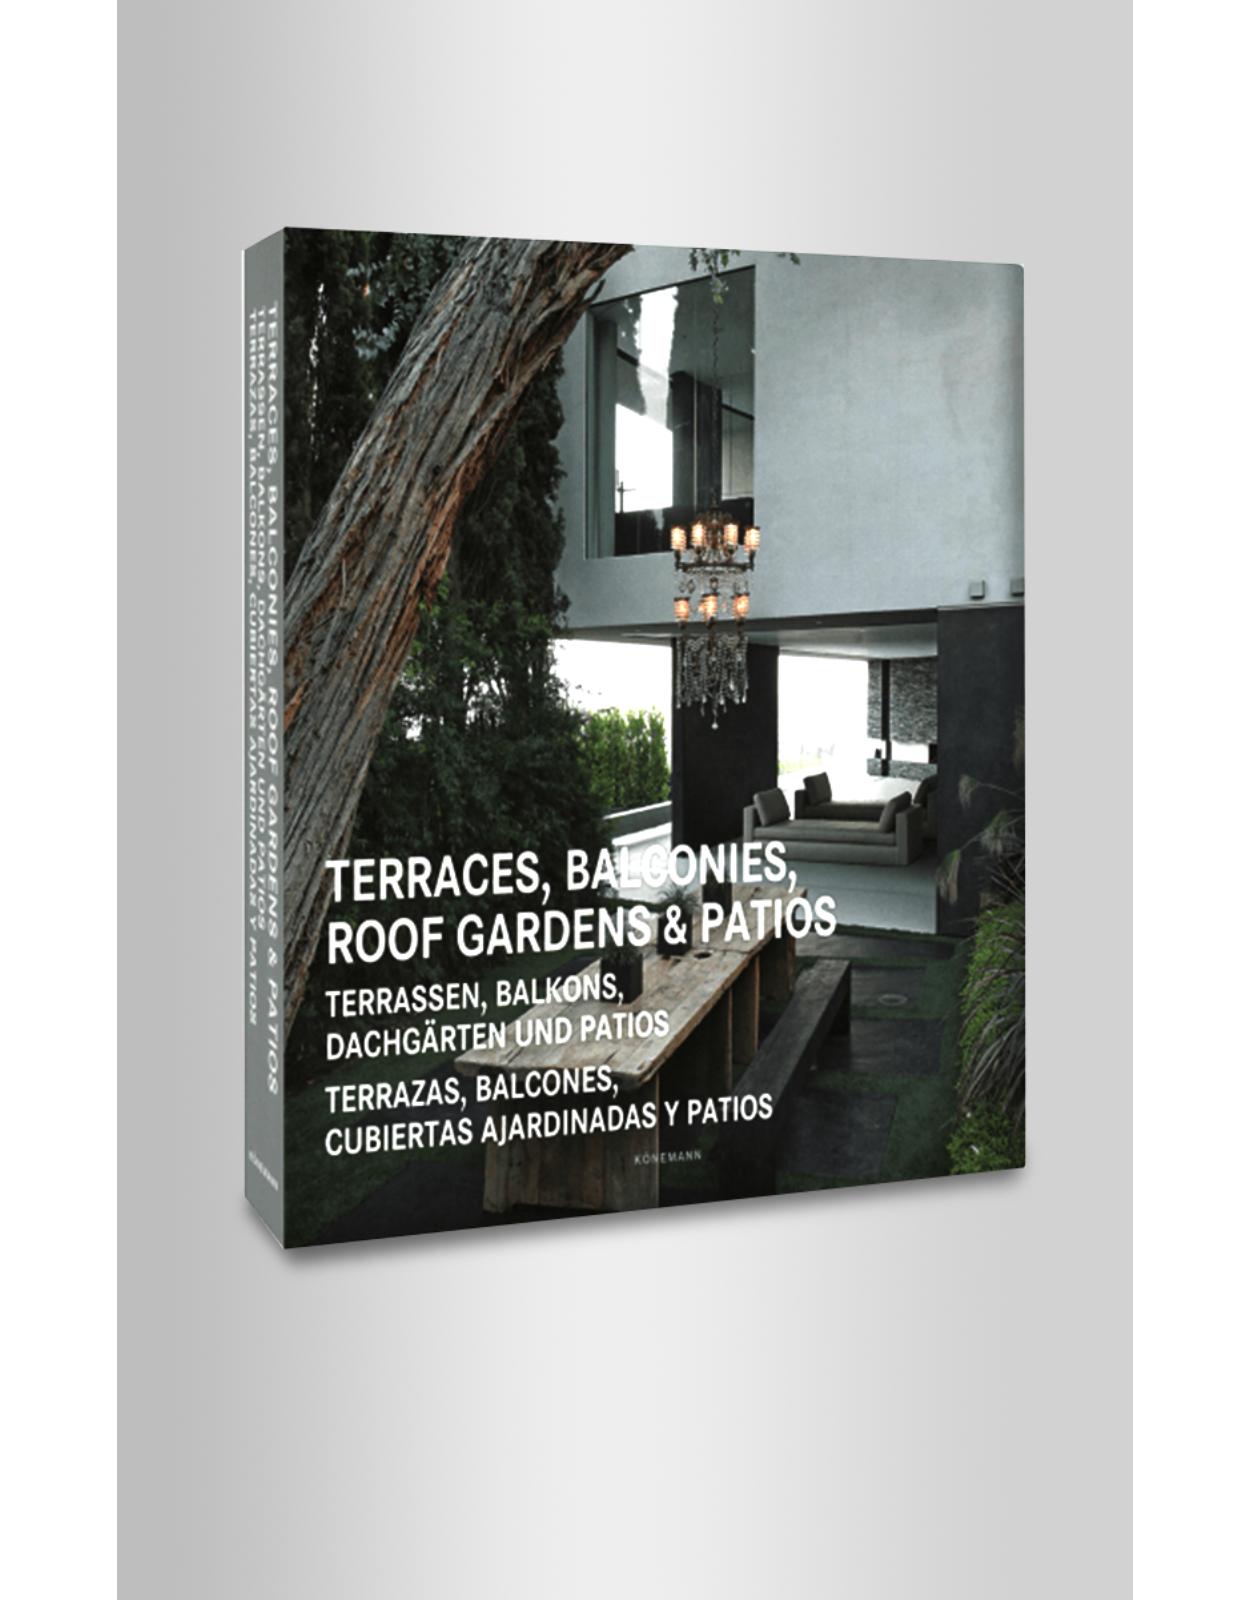 Terraces, balconies, roof gardens& patios